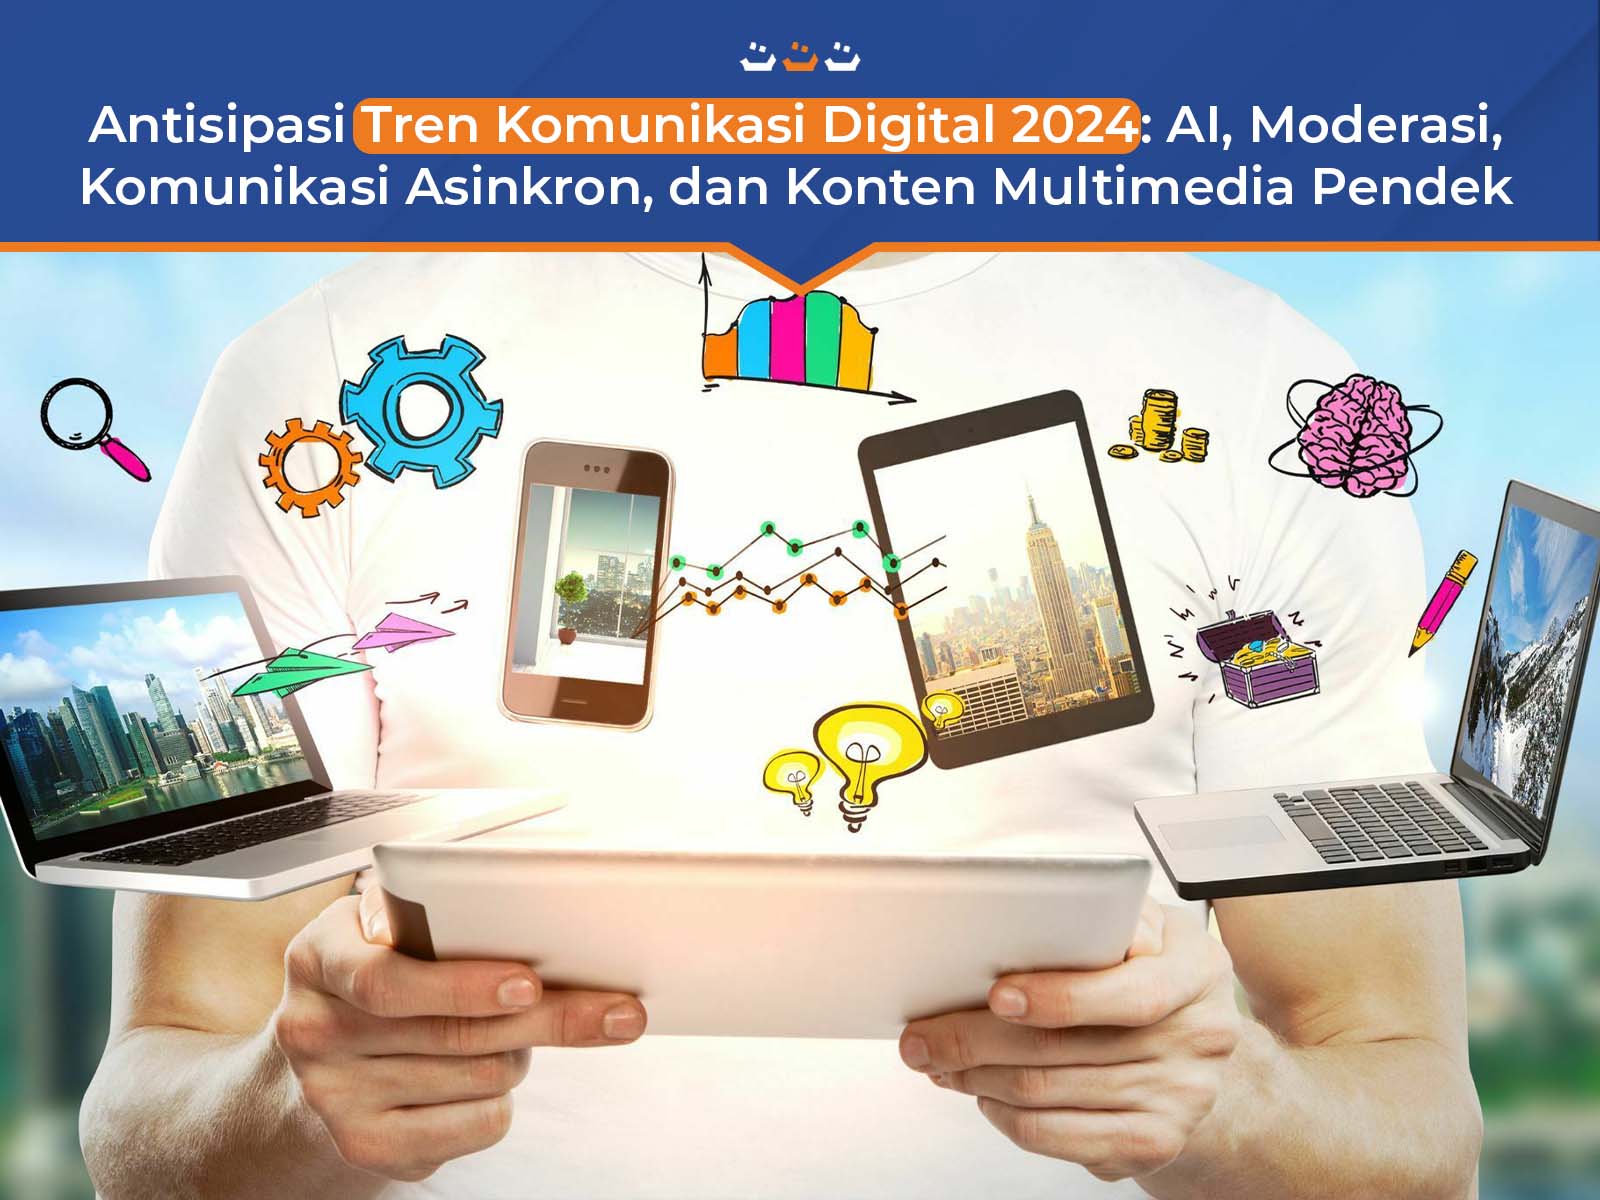 Antisipasi Tren Komunikasi Digital 2024: AI, Moderasi, Komunikasi Asinkron, dan Konten Multimedia Pendek